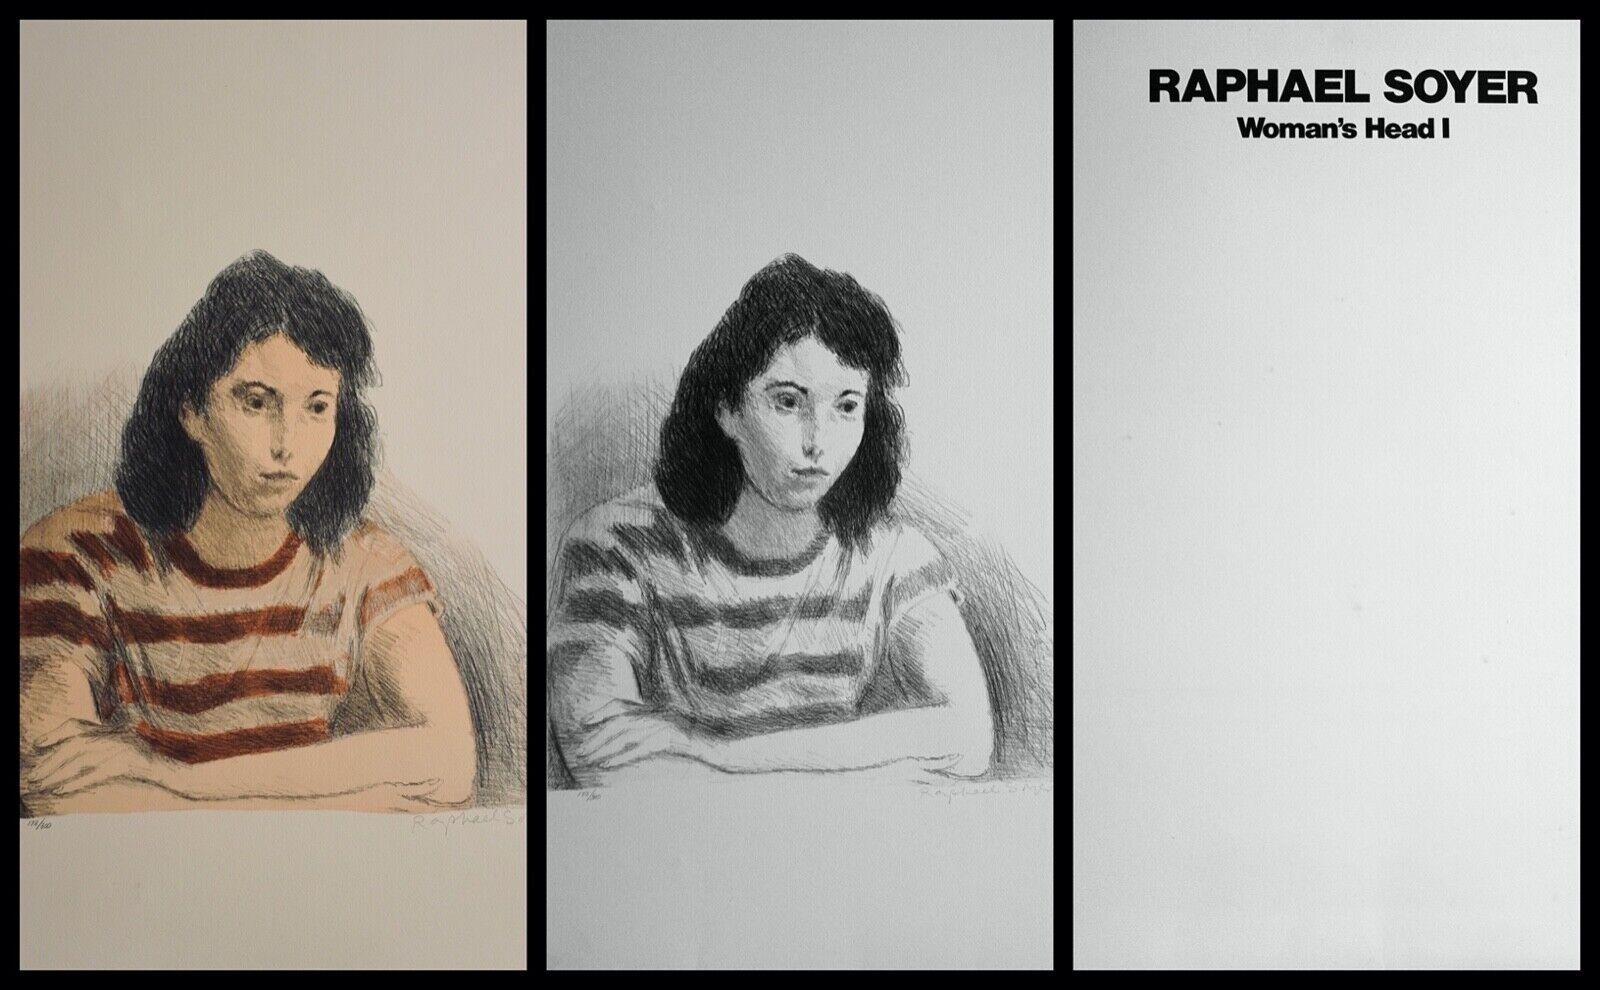 Raphael Soyer Portrait Print - Woman's Head Portfolio